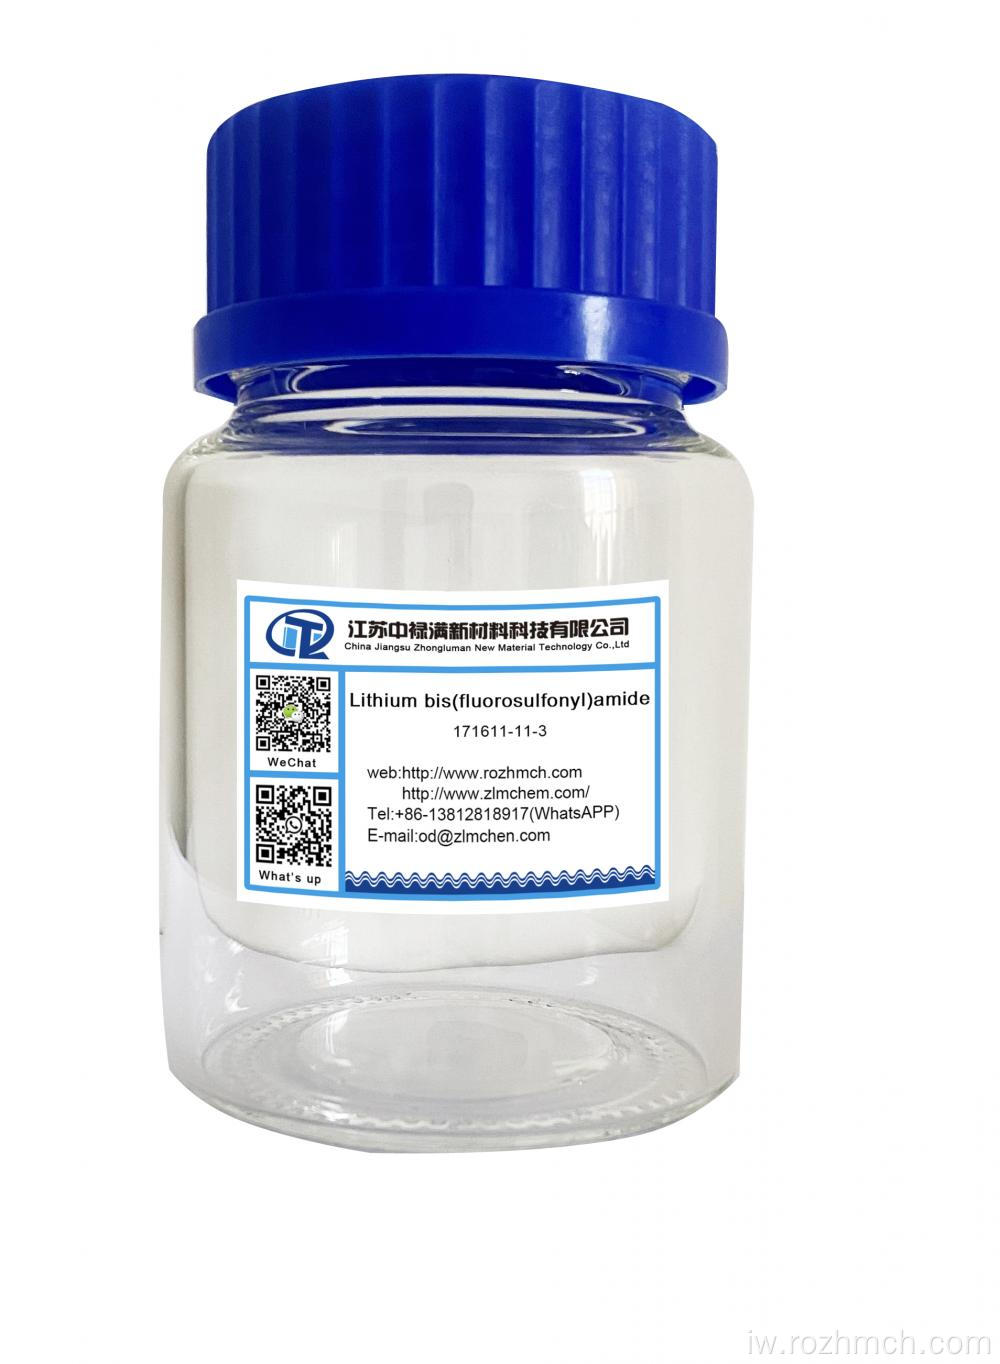 Lithium BIS (Fluorosulfonyl) IMIDE CAS NO 171611-11-3